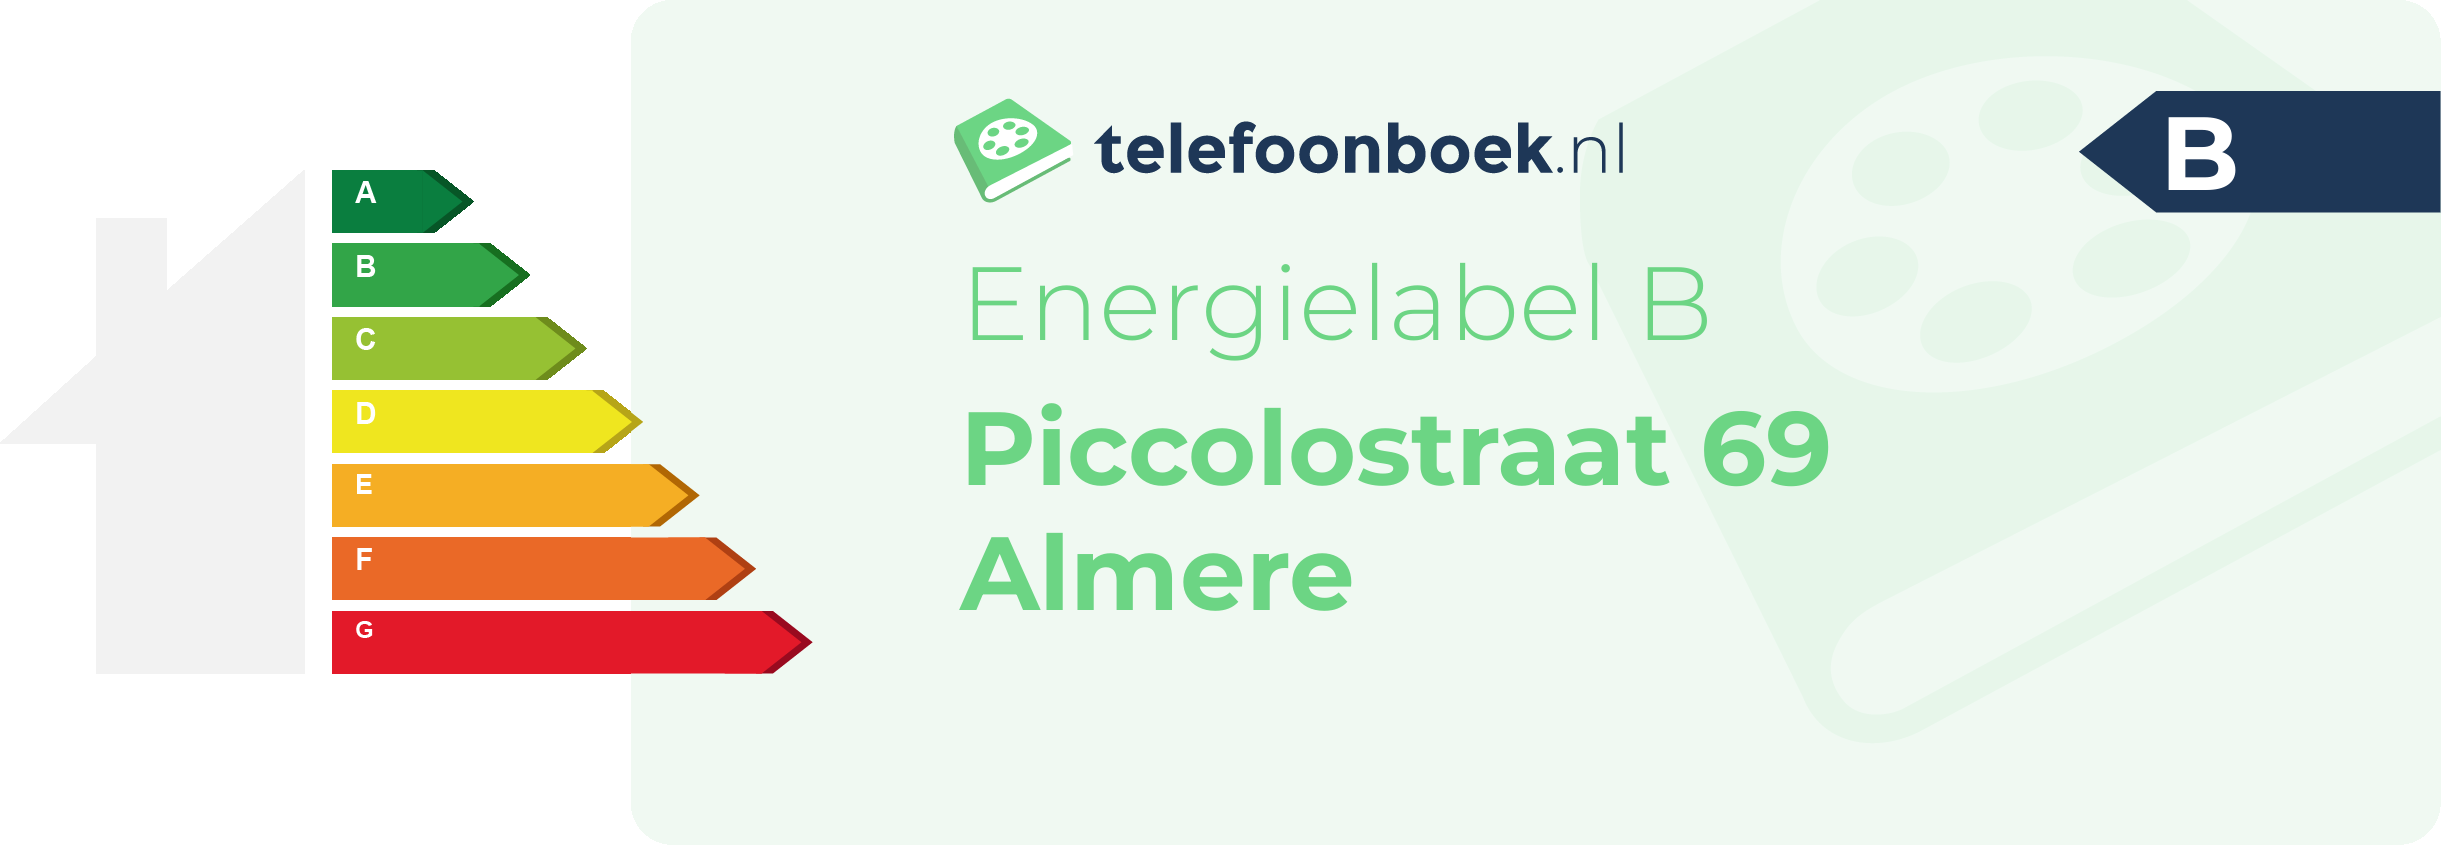 Energielabel Piccolostraat 69 Almere